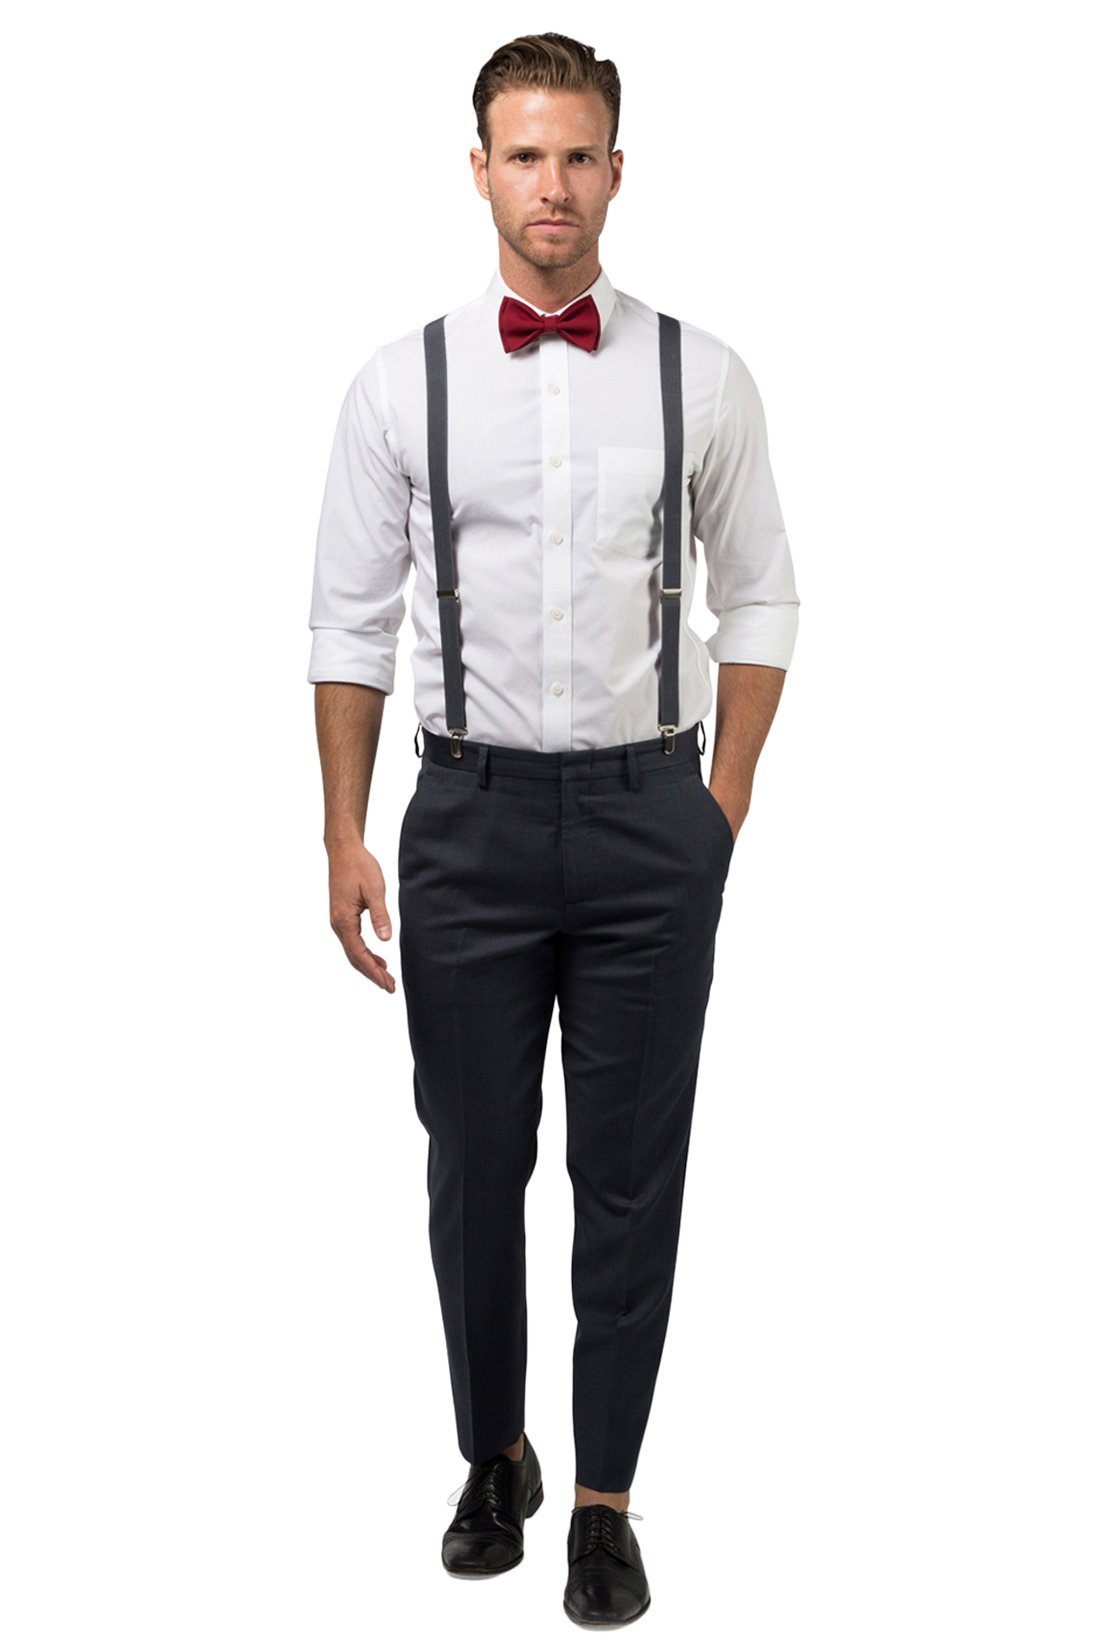 Charcoal Suspenders & Burgundy Bow Tie